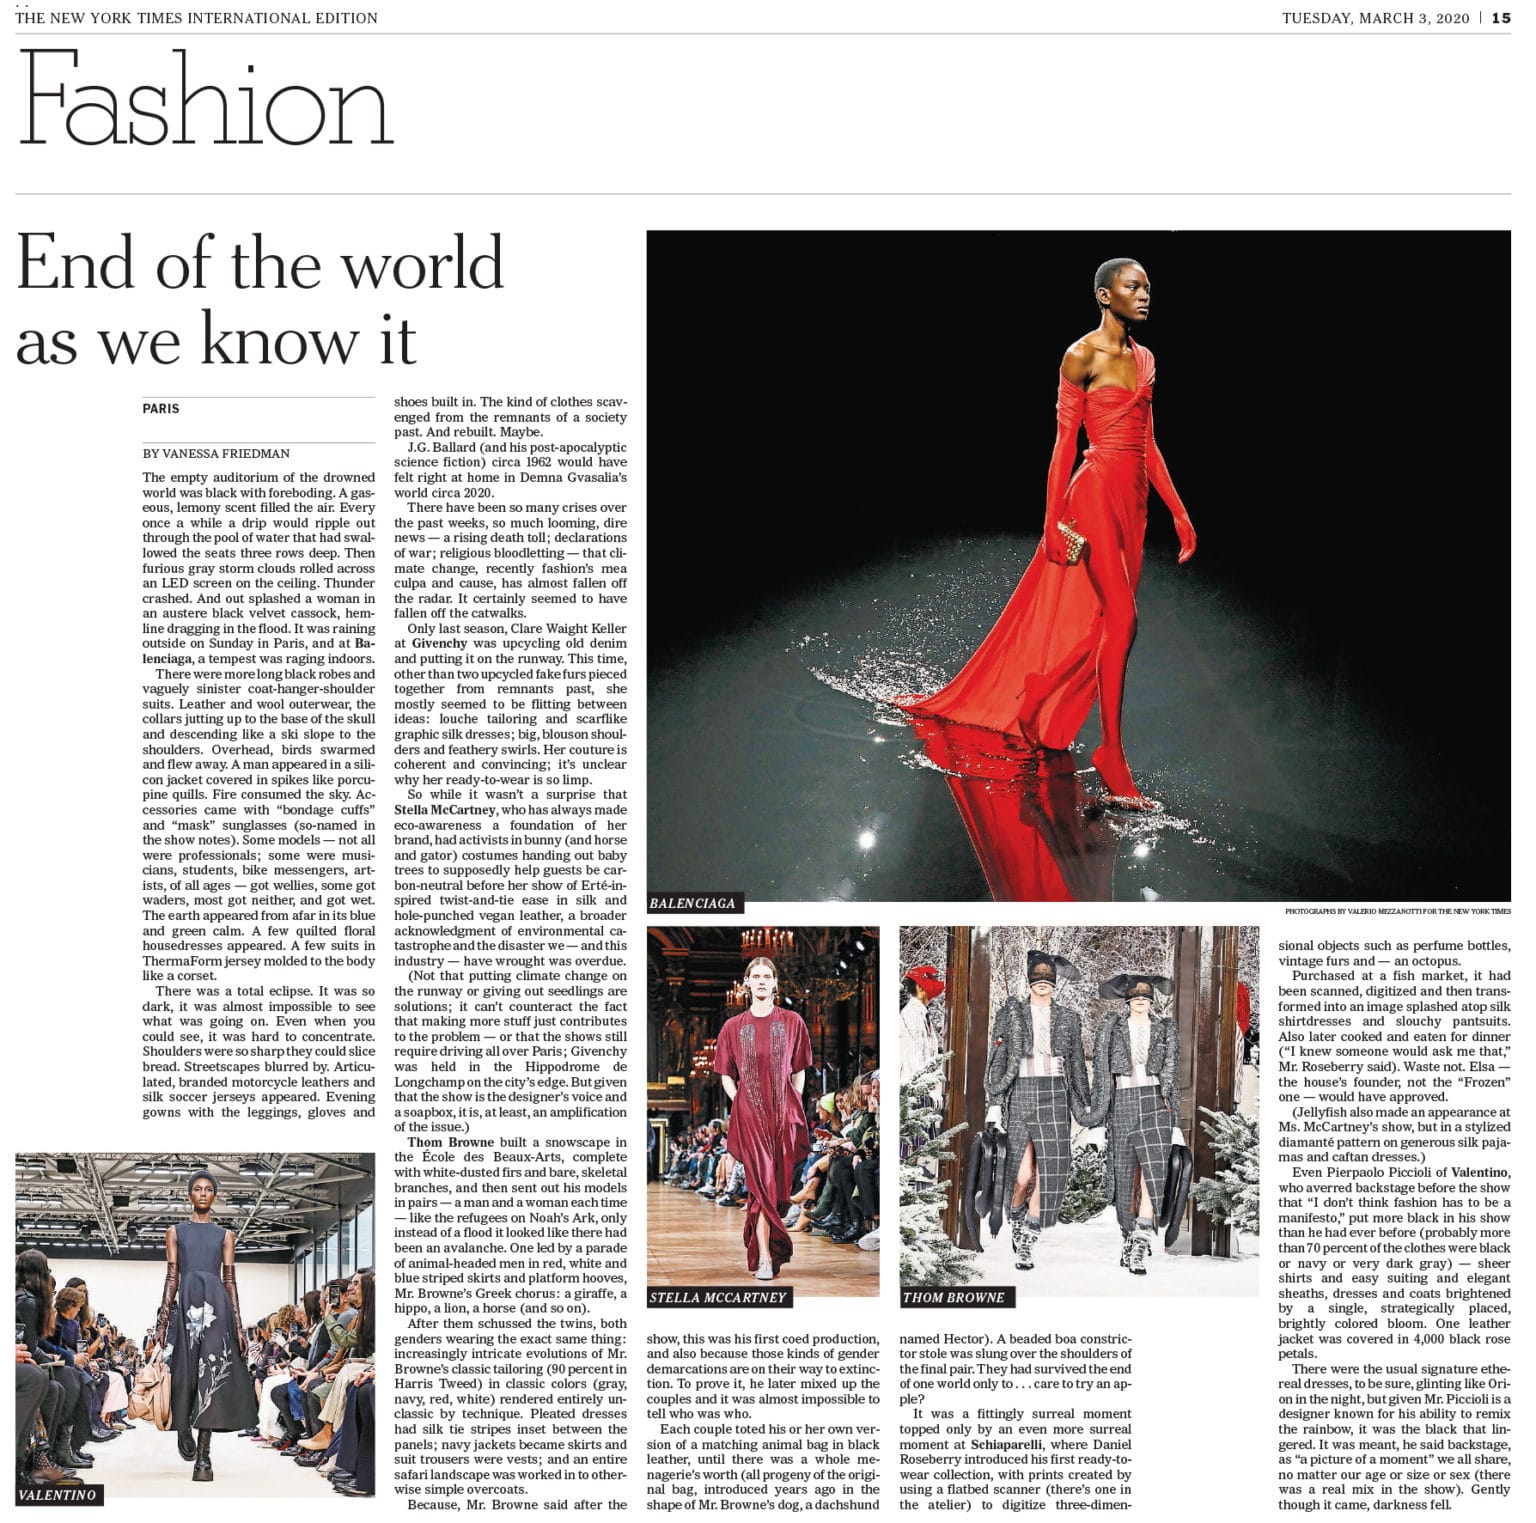 Balenciaga, Valentino, Stella McCartney and Thom Browne review, Photo by Valerio Mezzanotti for The New York Times